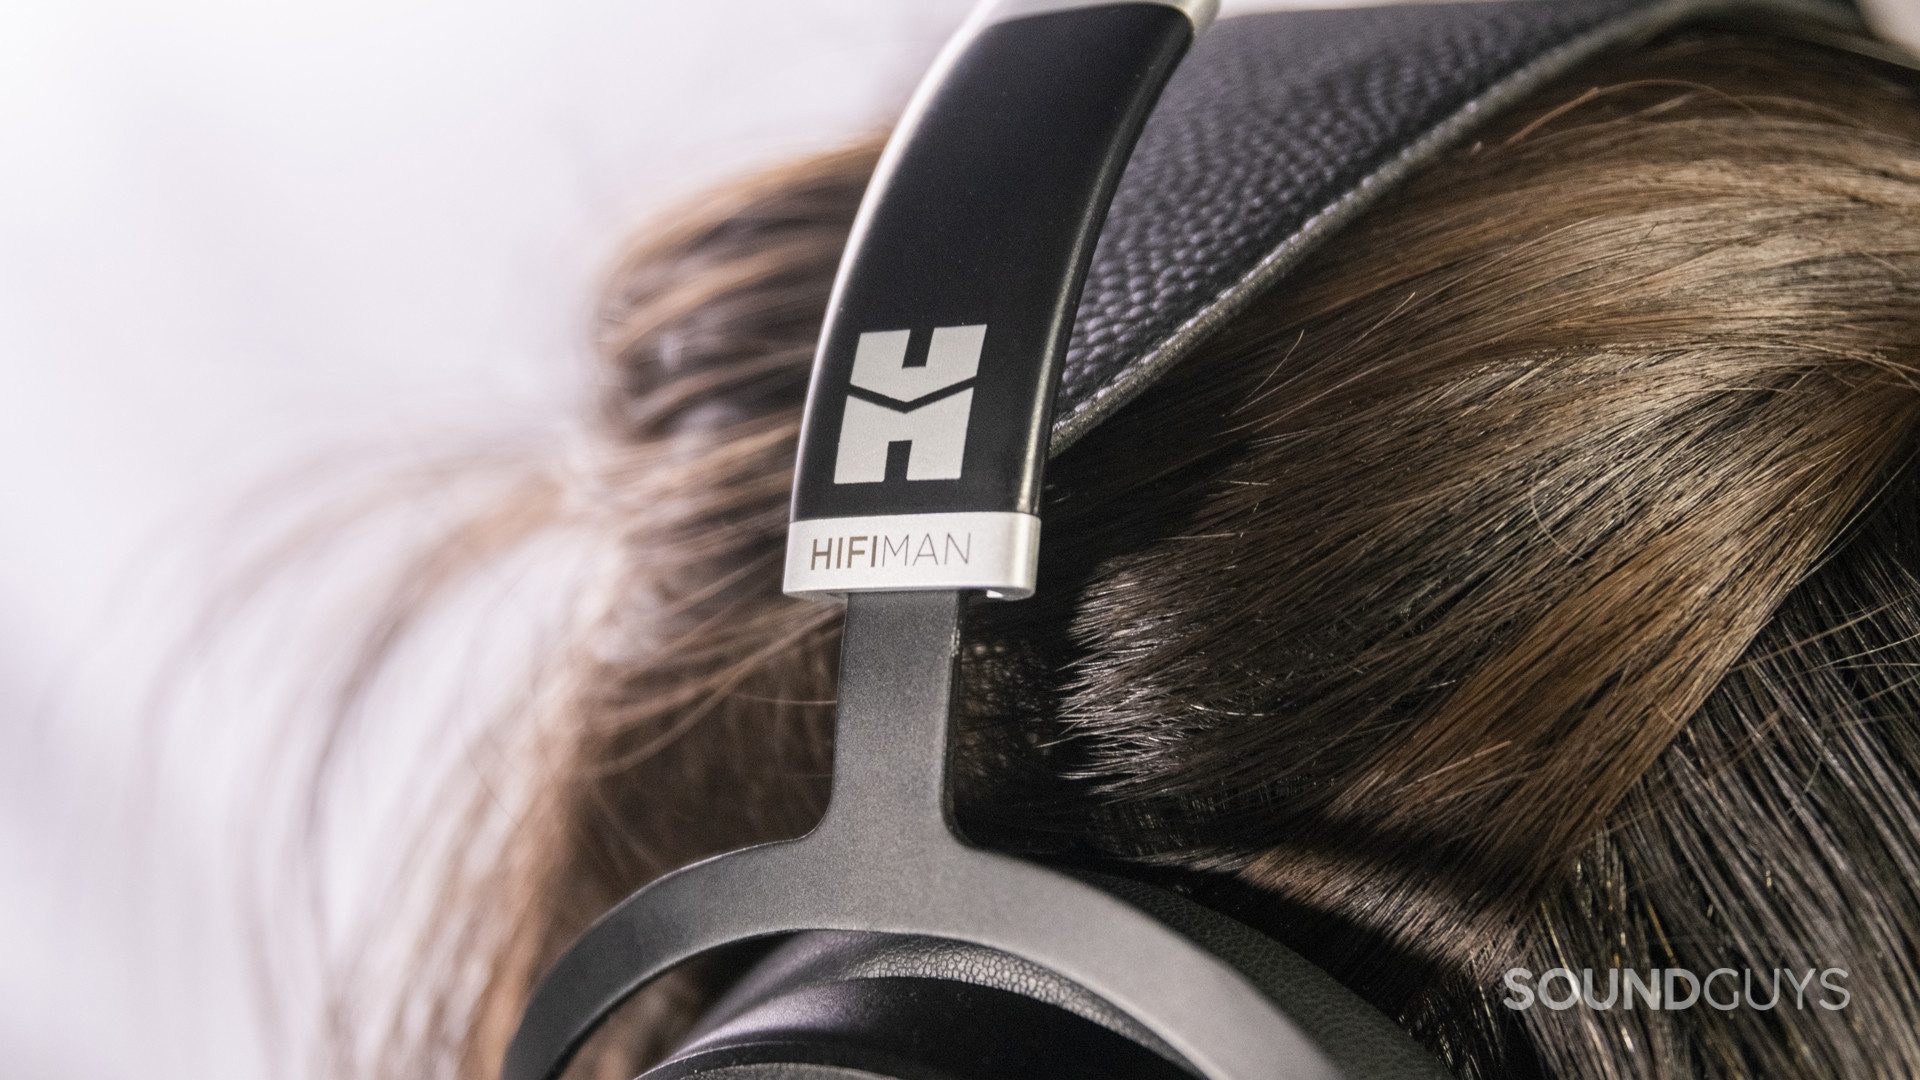 The headband of the HiFiMan Sundara showing off the company logo.